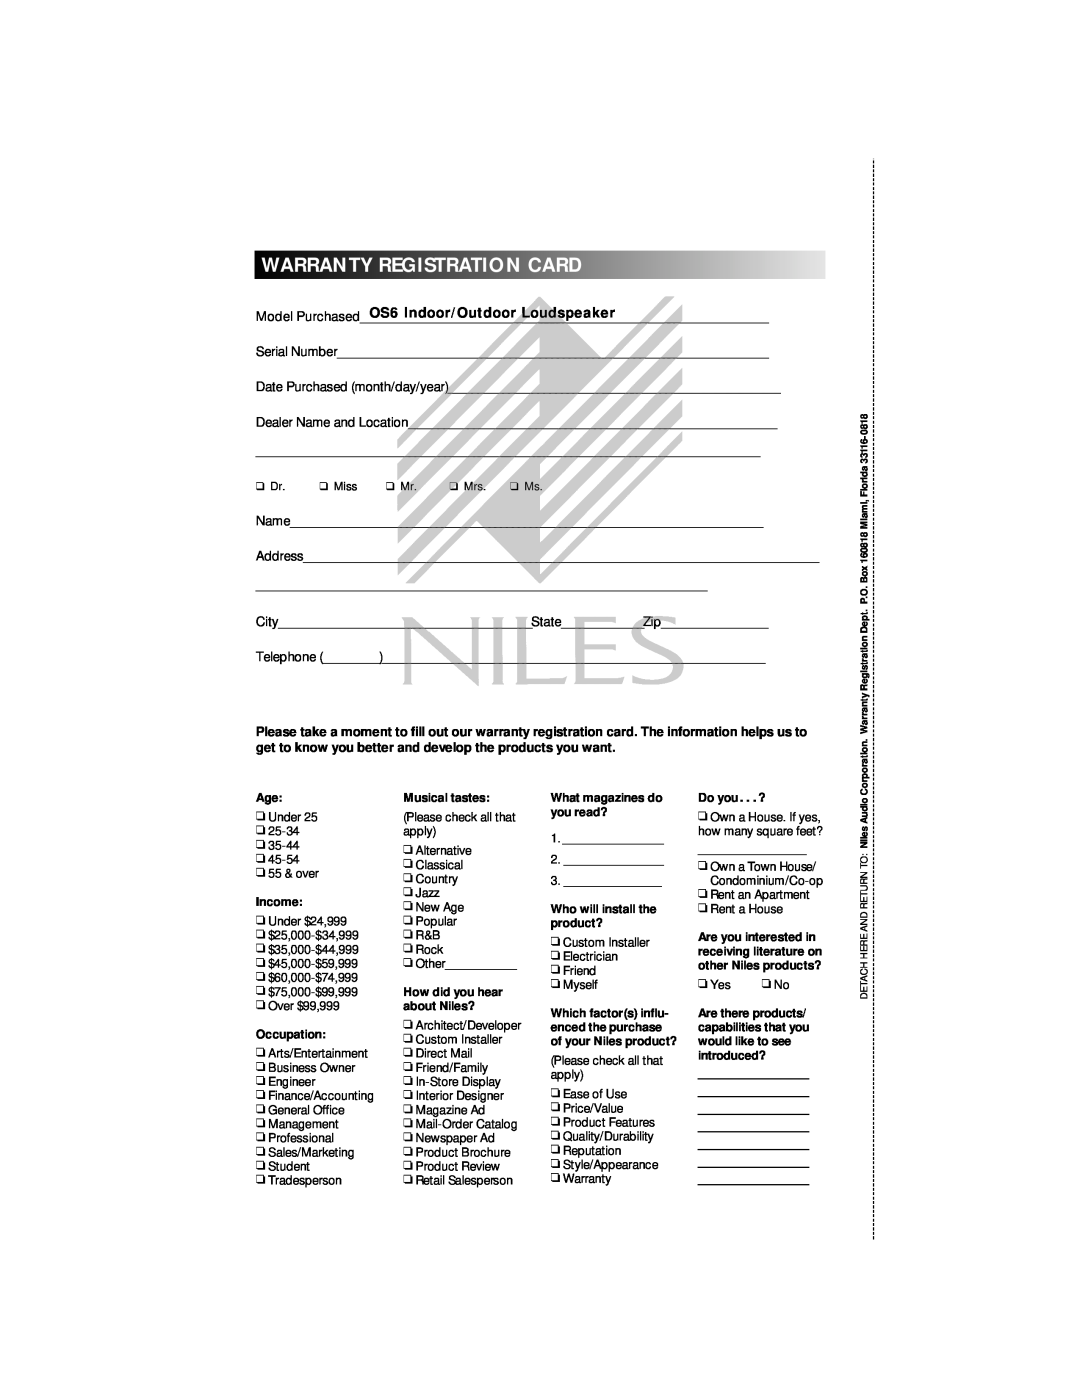 Niles Audio manual Warrantyregistrationcard, OS6 Indoor/Outdoor Loudspeaker 